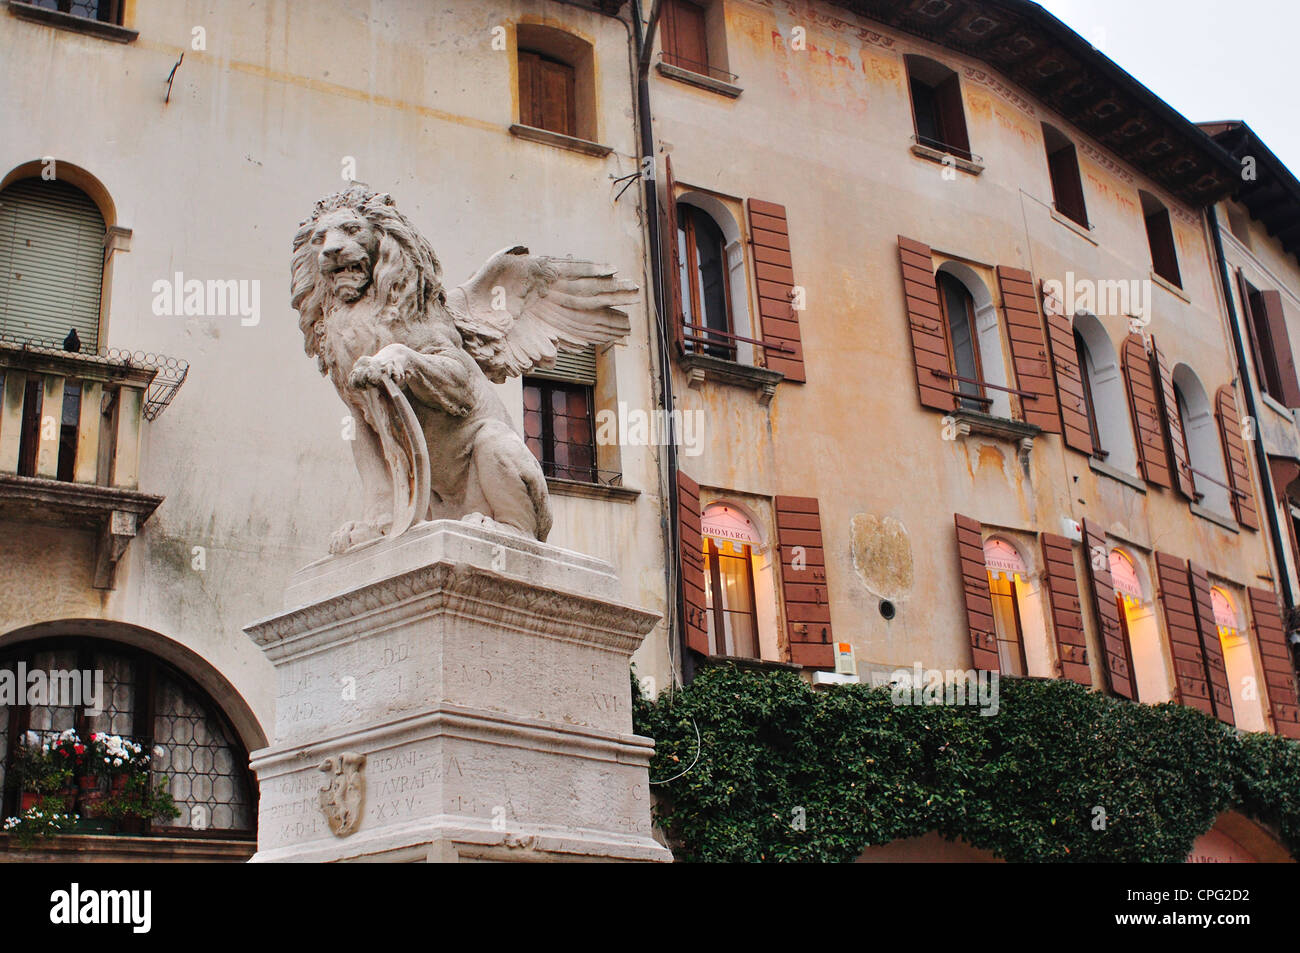 Italy, Veneto, Asolo, Fountain, Statue of a Winged Lion Stock Photo